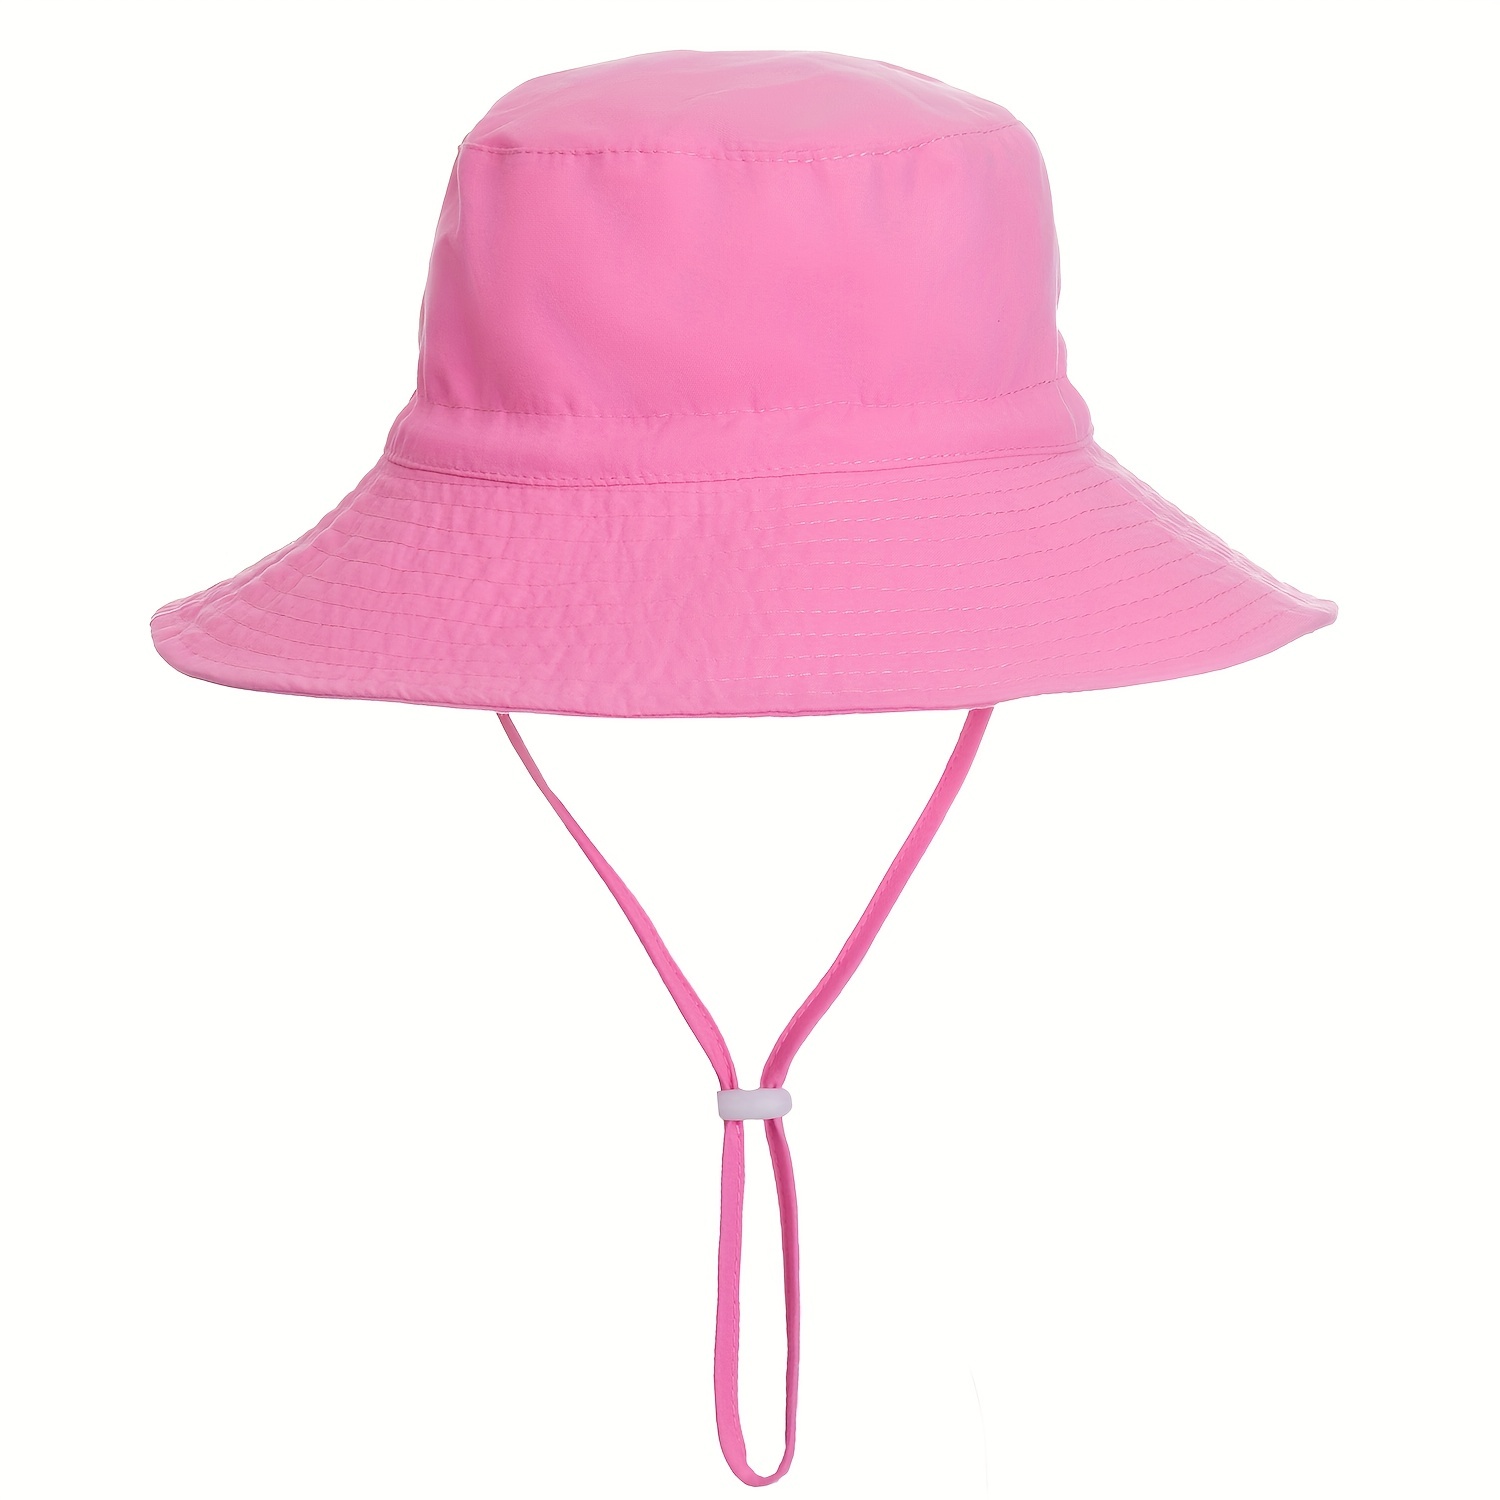  Kids Sun Hat for Boys Girls Outdoor Boy Sun Hat UPF 50